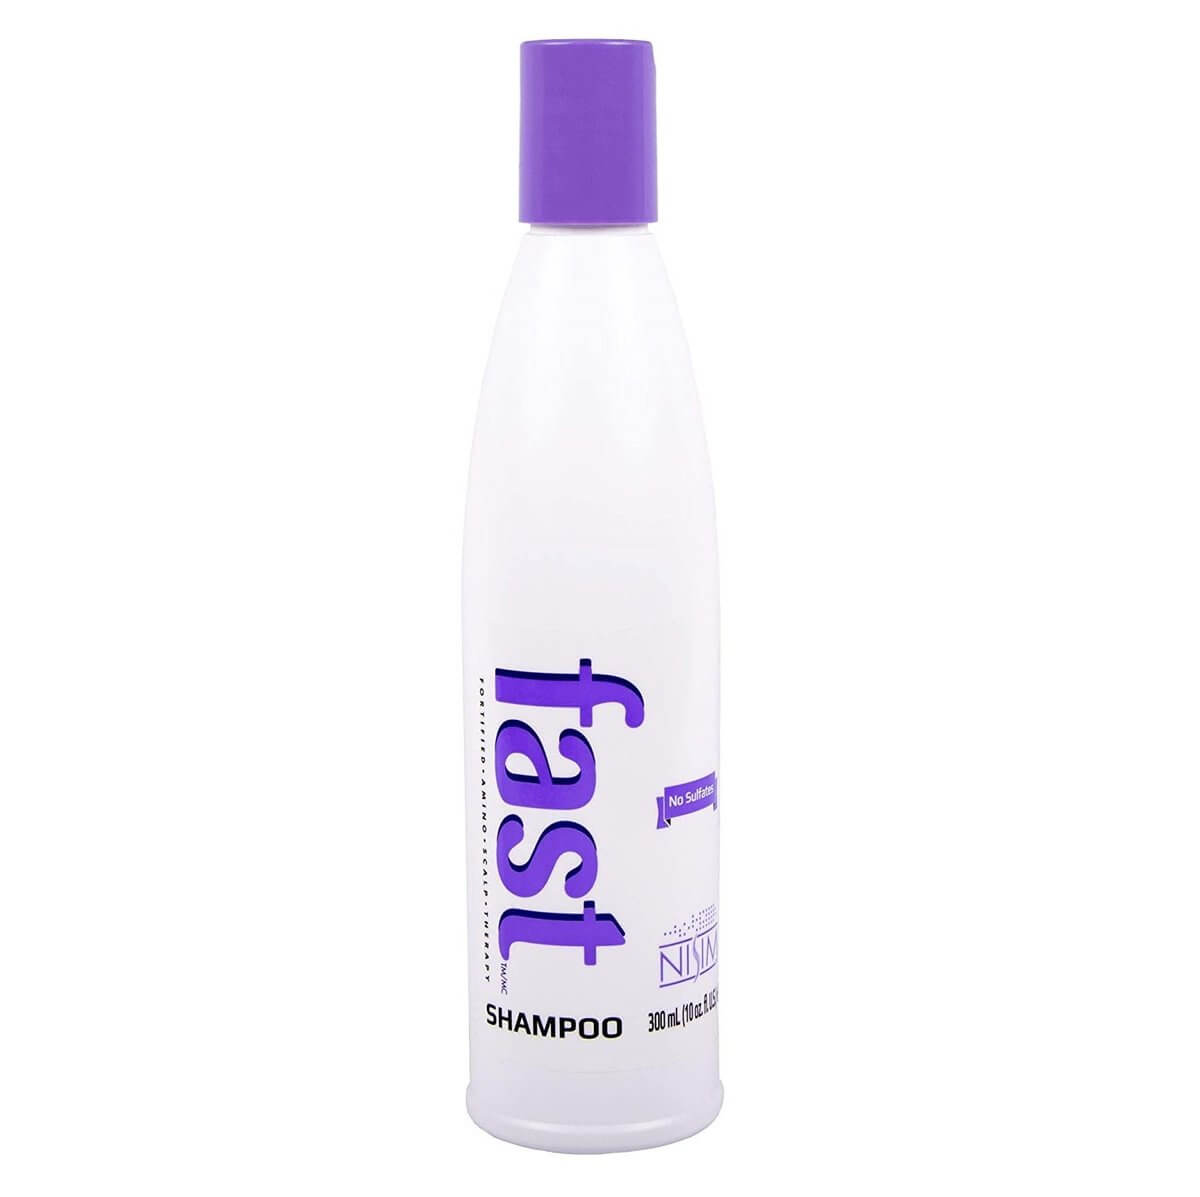 NISIM Fast Shampoo 300ml Extremely fast intensive growth shampoo